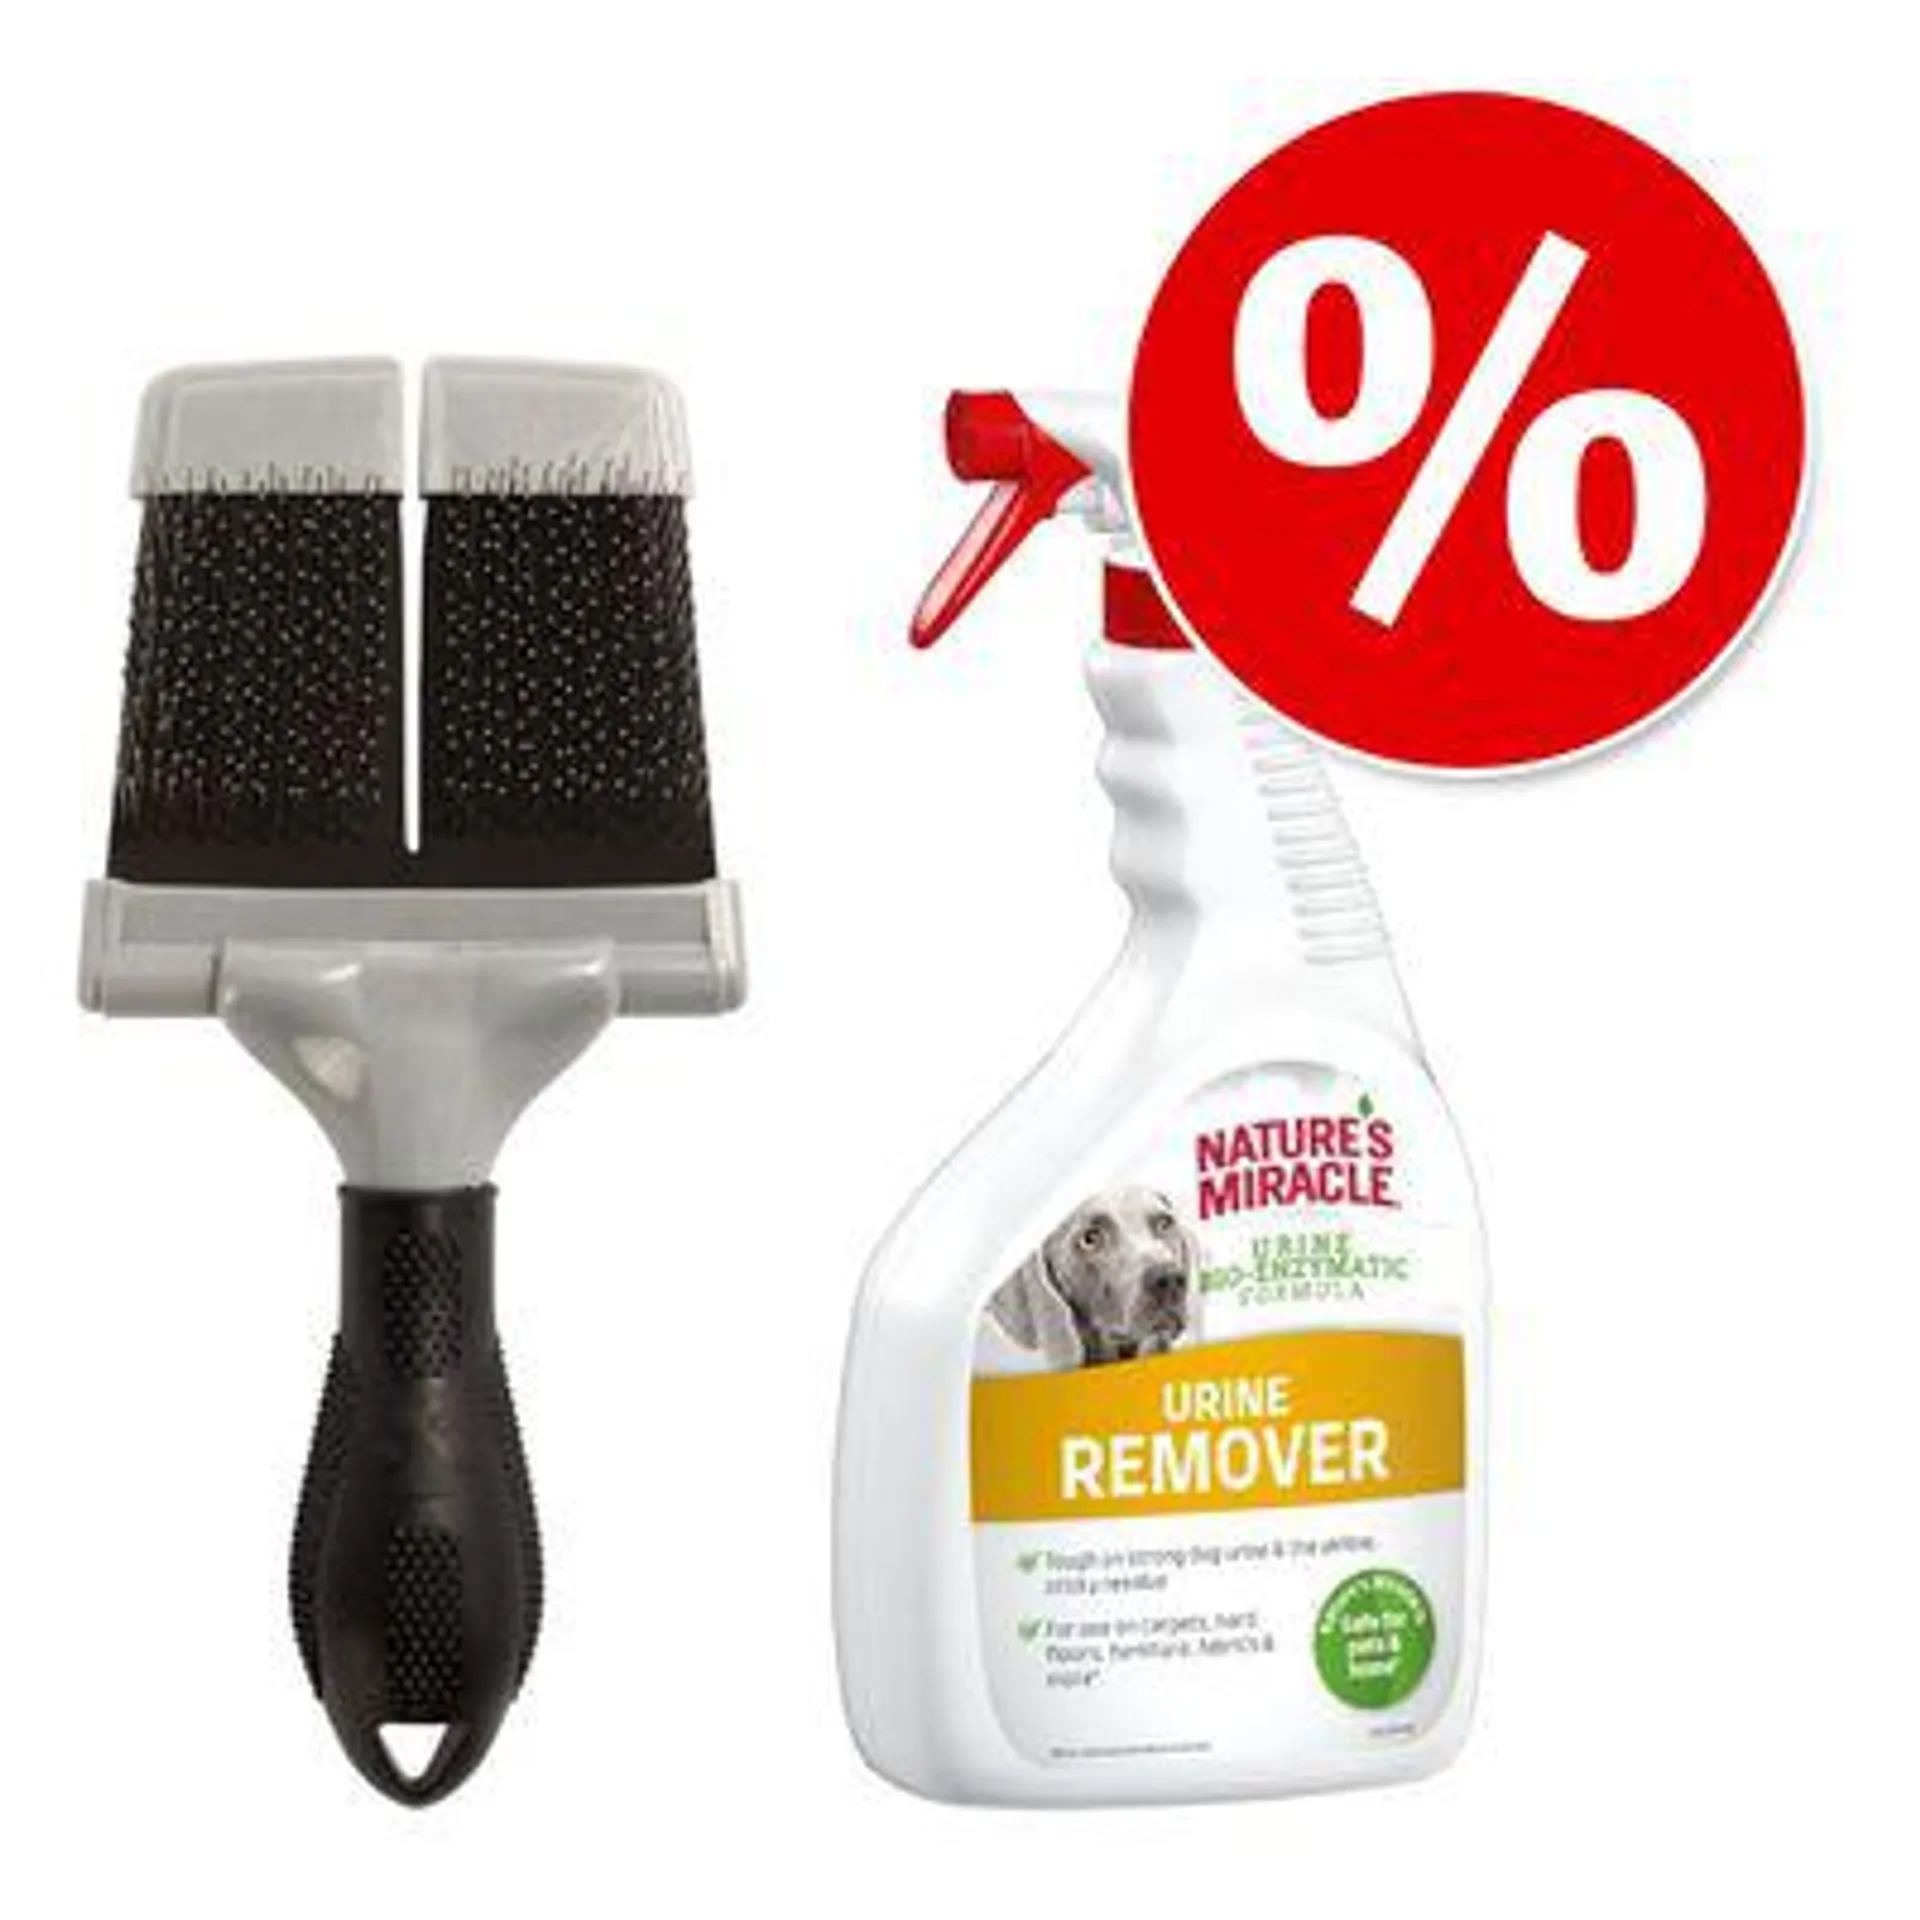 FURminator Dog Brush + Nature's Miracle Remover Spray - Bundle Price! *